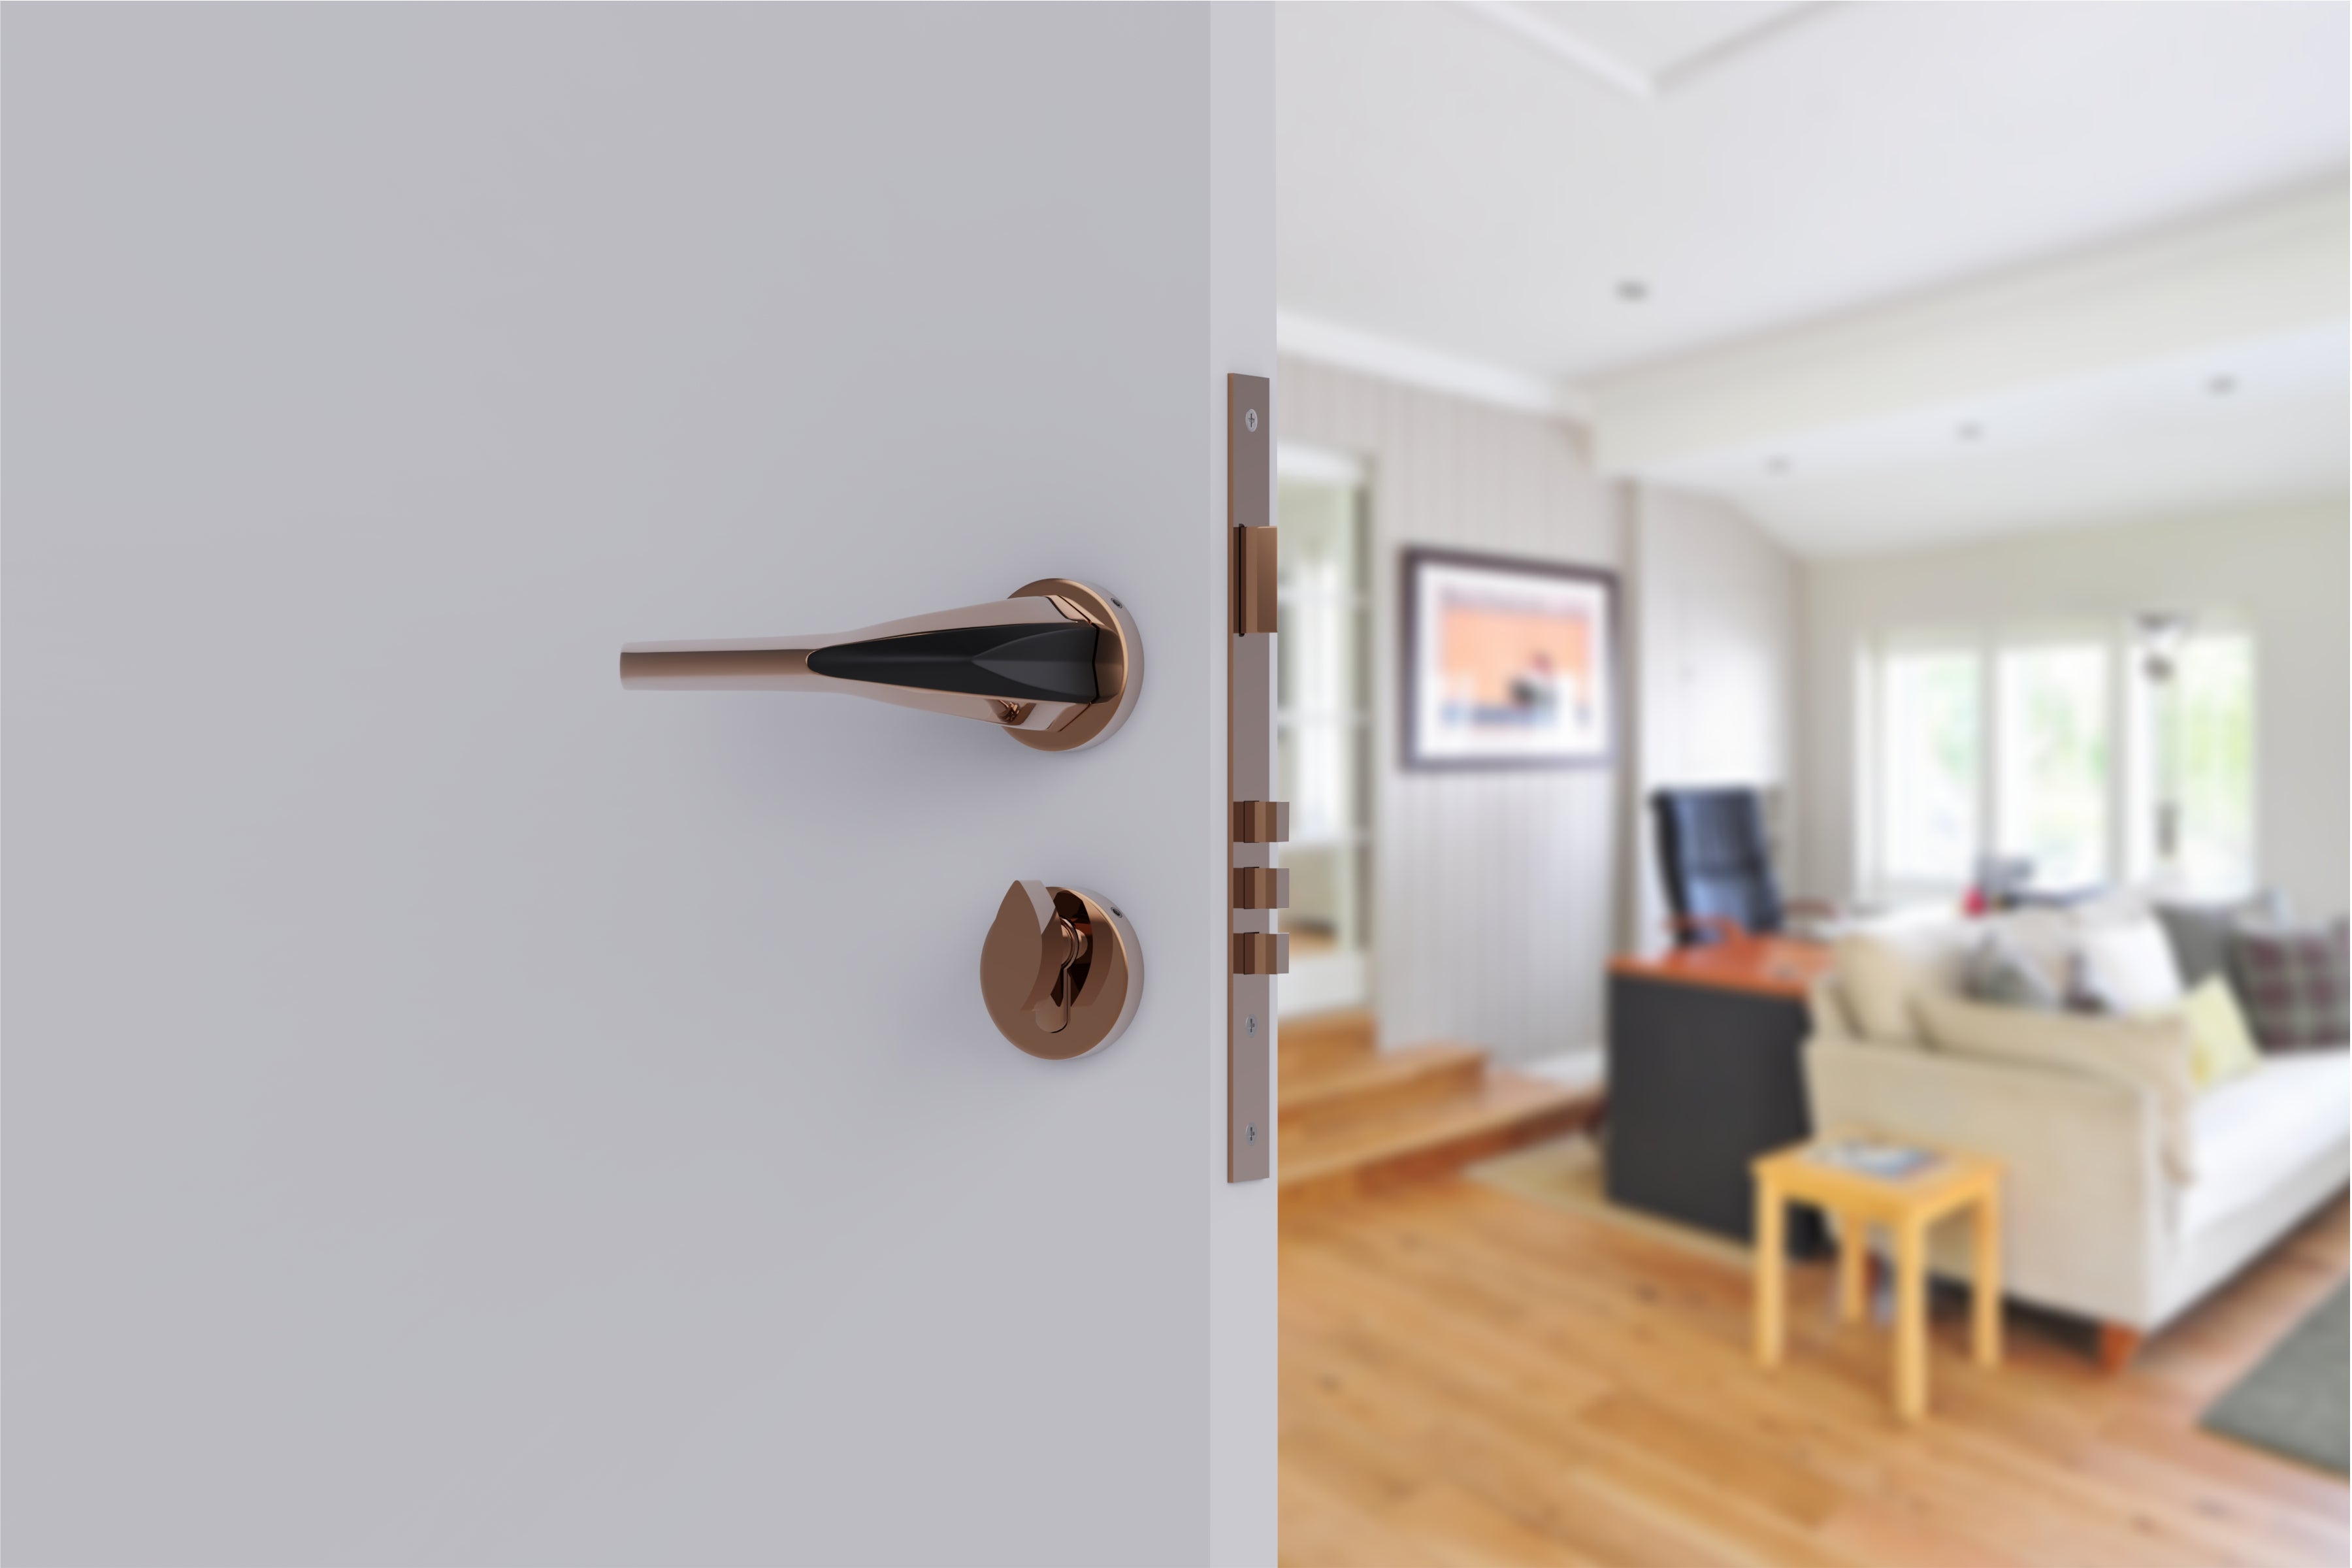 Heavy Duty Mortise Door Locks for Main Door Lock Handles Set Balcony and Storeroom, Bathroom-by GLOXY®